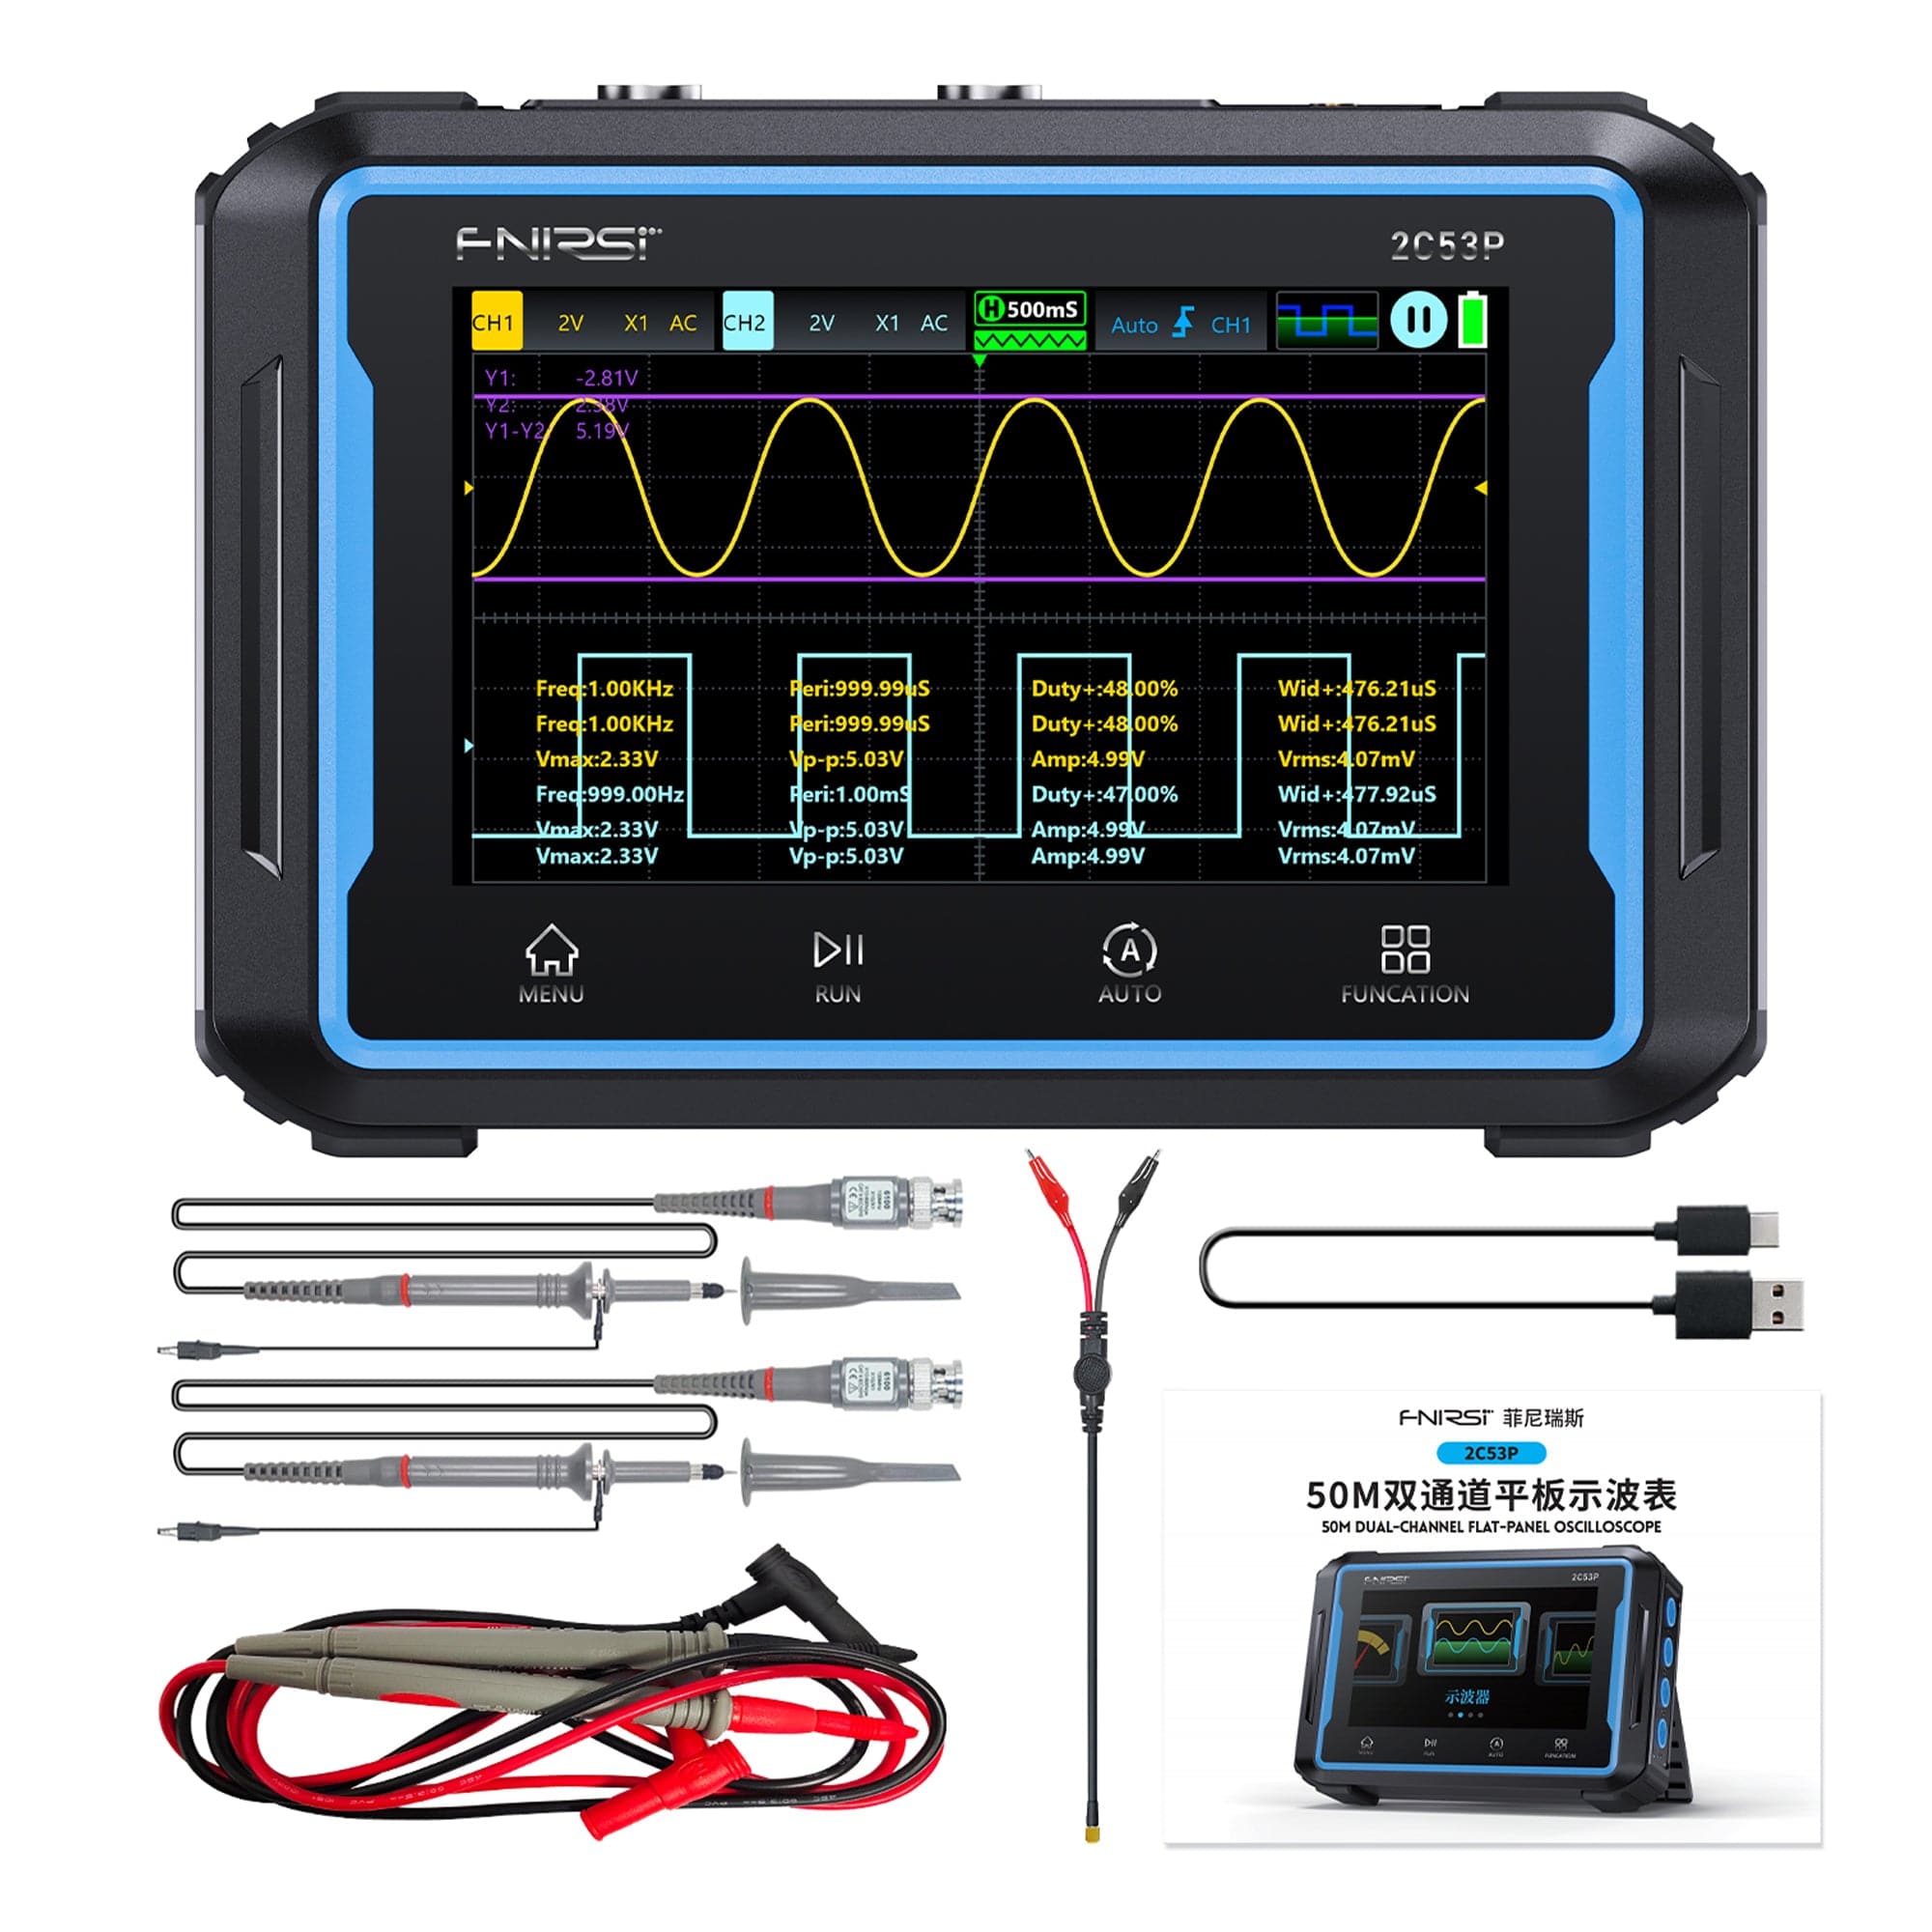 FNIRSI® 2C53P 3-in-1 Dual Channel Tablet Oscilloscope + Multimeter + Function Generator